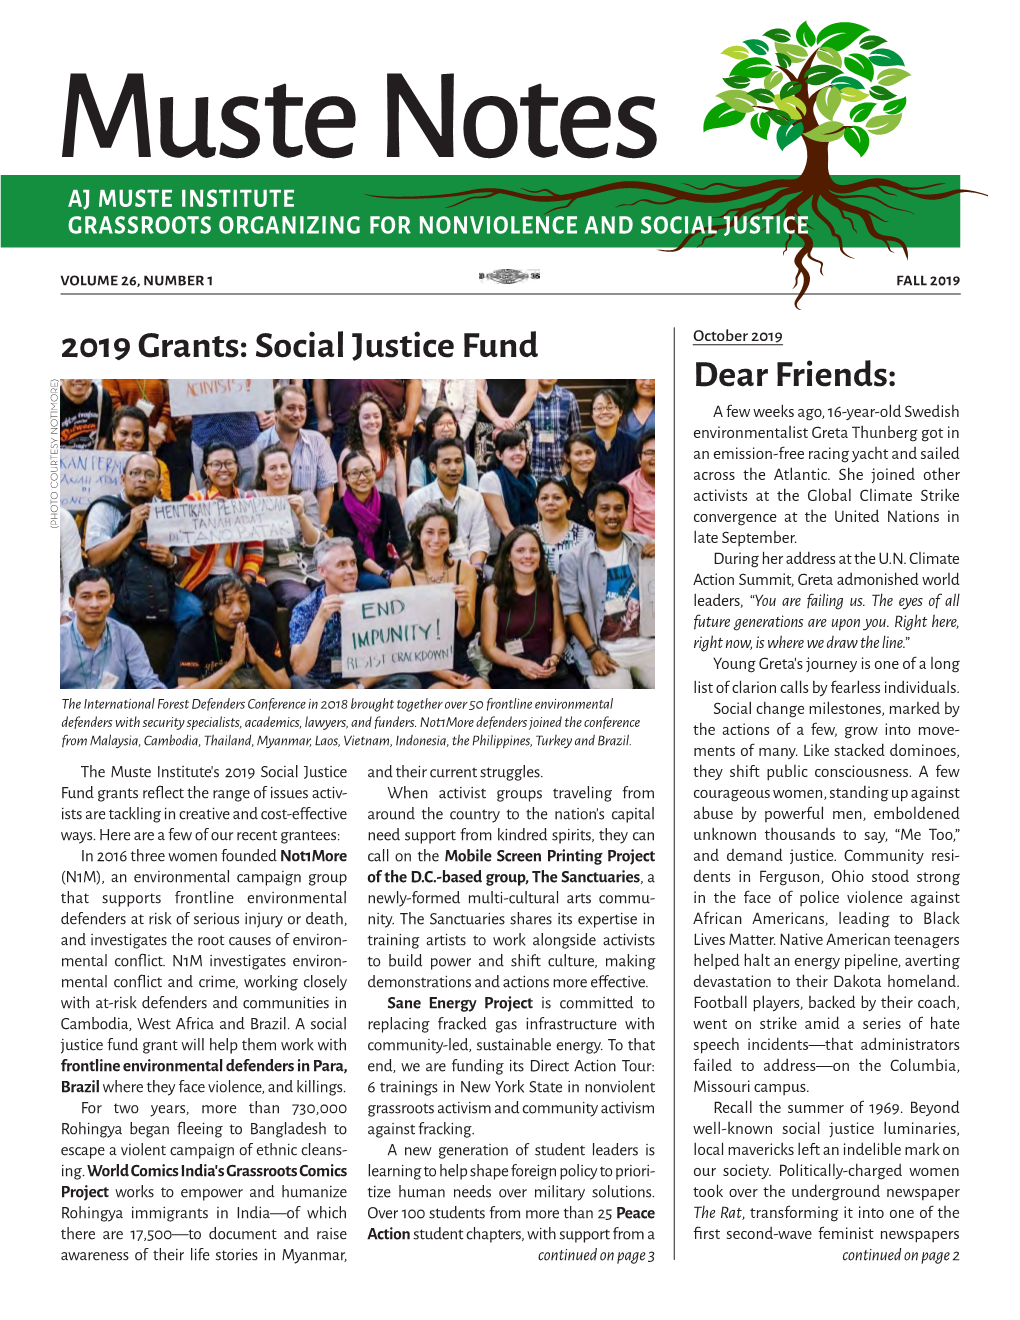 Dear Friends: 2019 Grants: Social Justice Fund